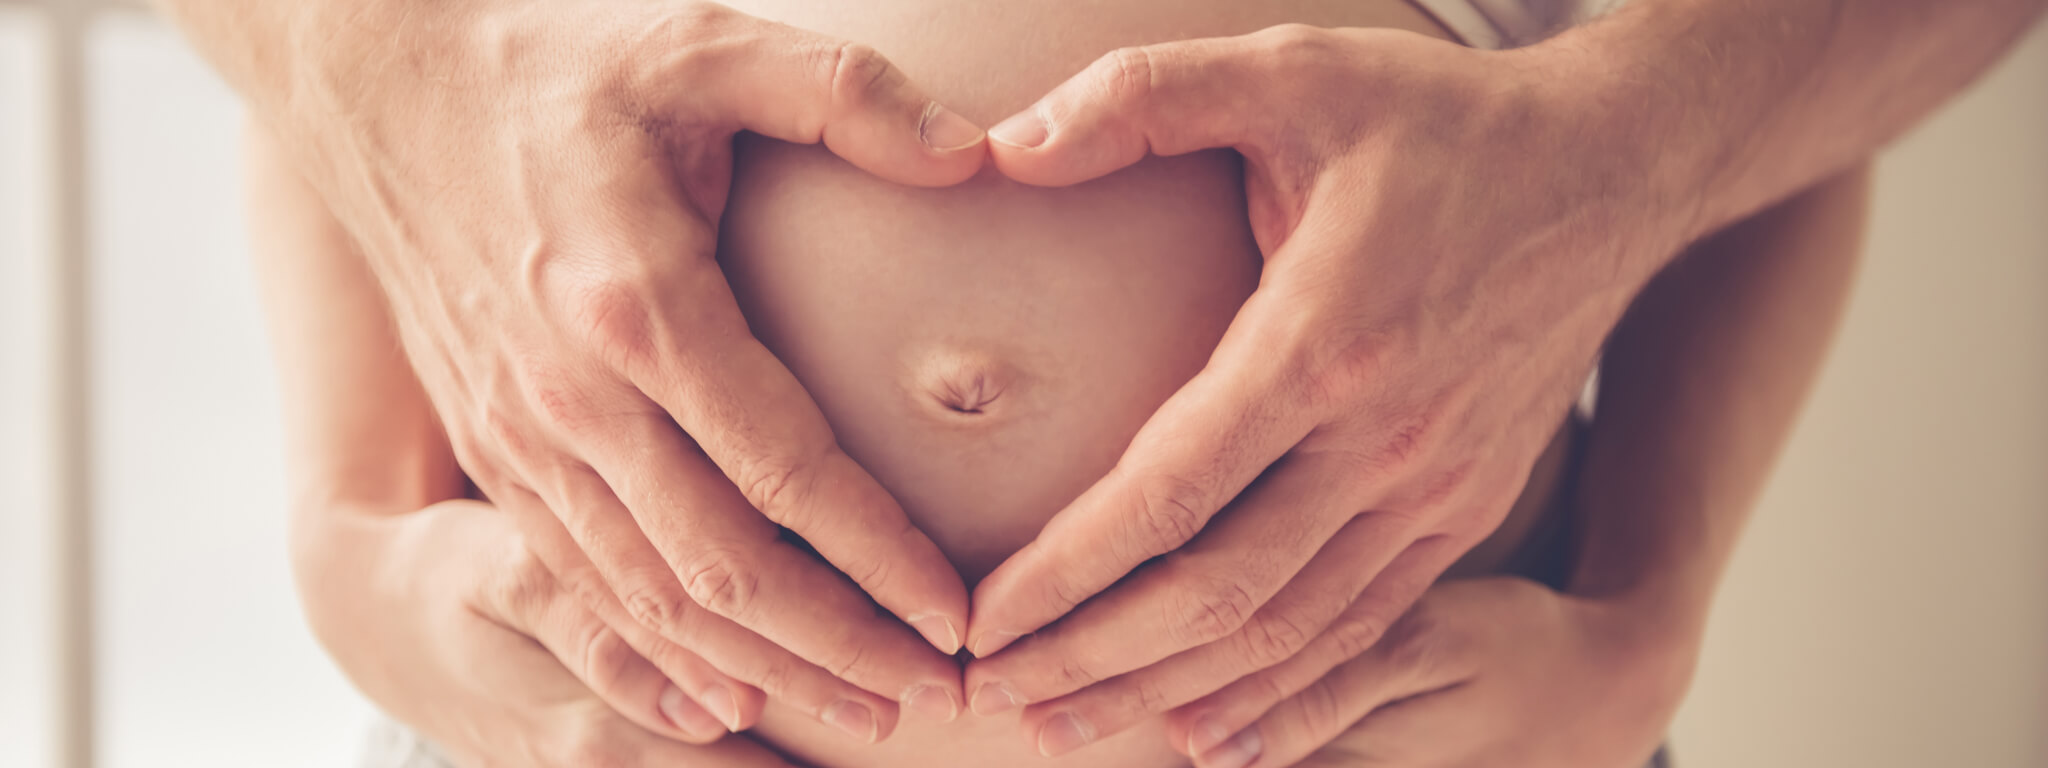 Subsídios na gravidez: conheça os apoios para grávidas